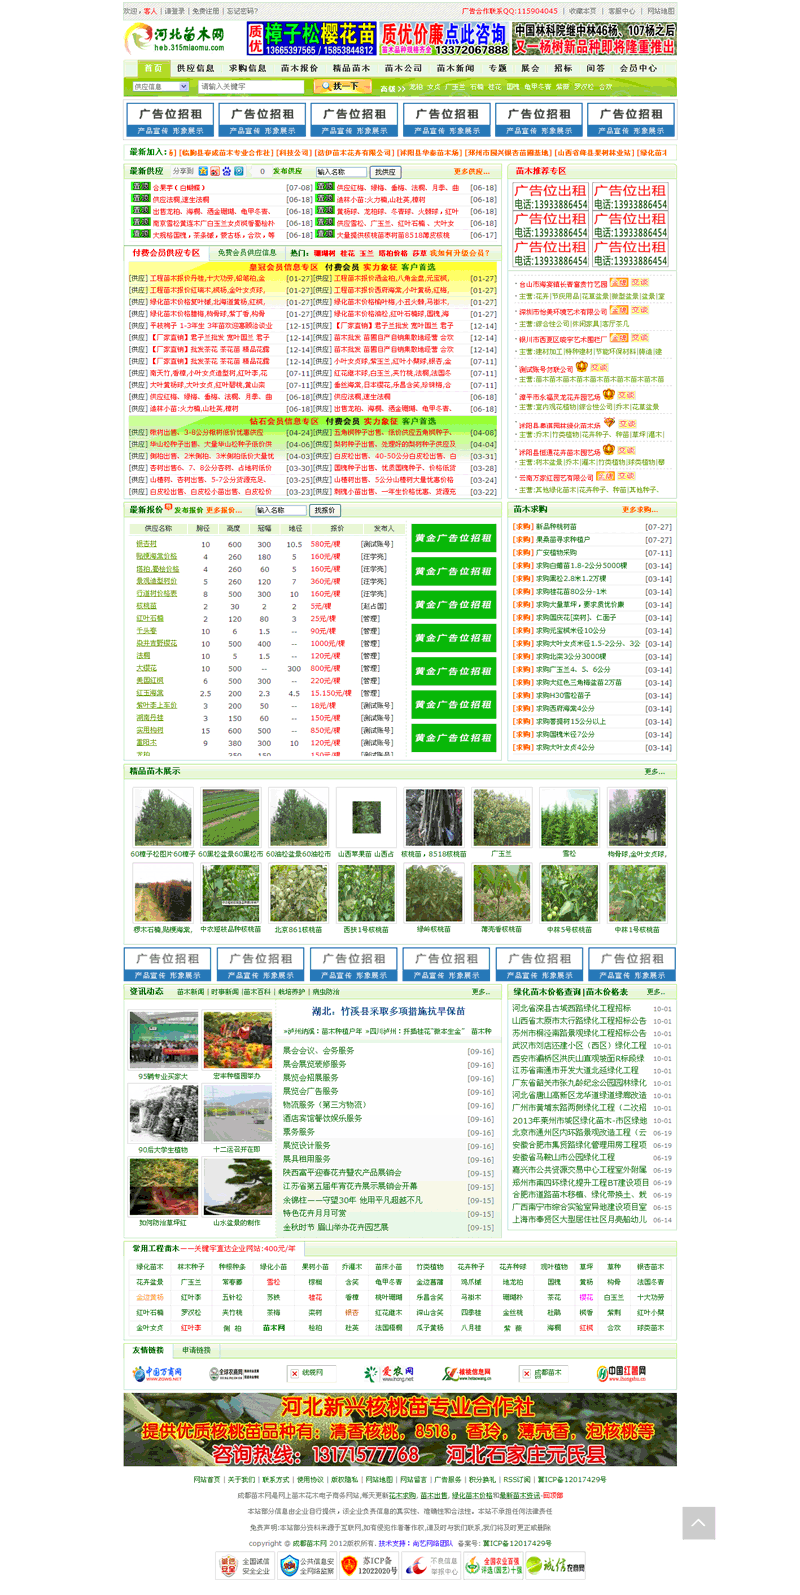 destoon6.0 仿597苗木模版 597mm苗木行业网站 2015 花卉苗木模版 